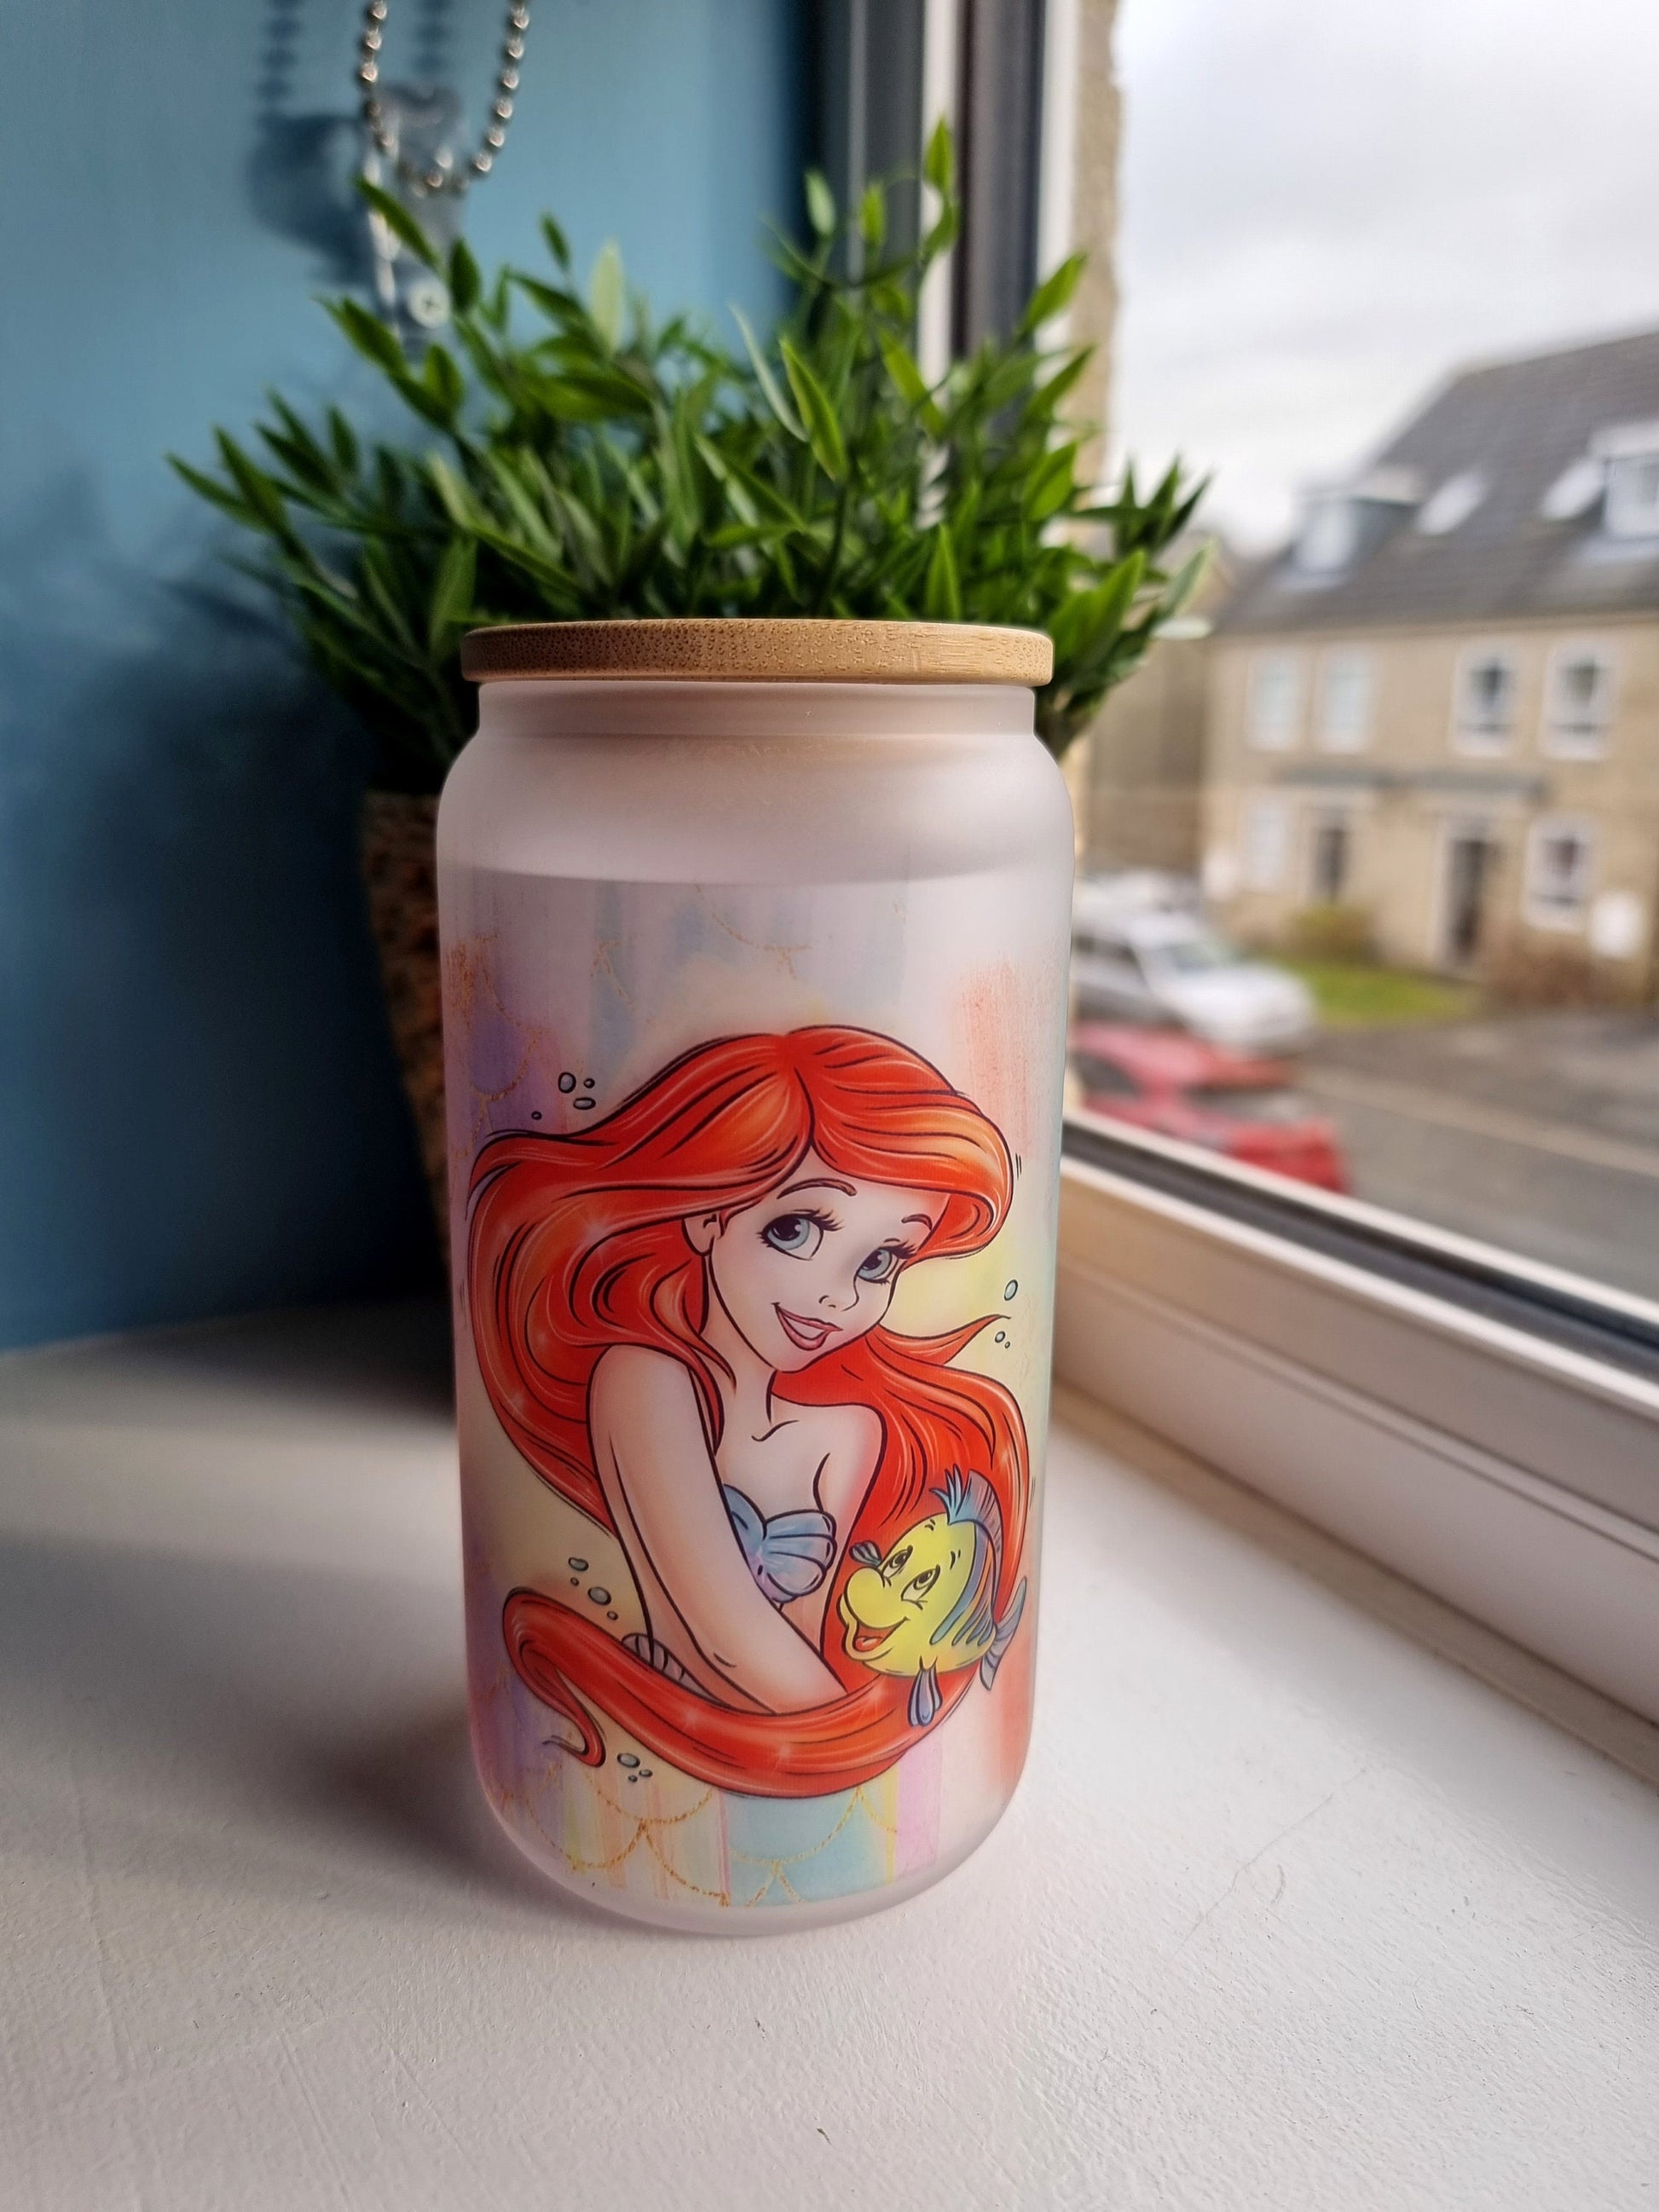 Disney The Little Mermaid Ariel Anchor Princess Can Cup